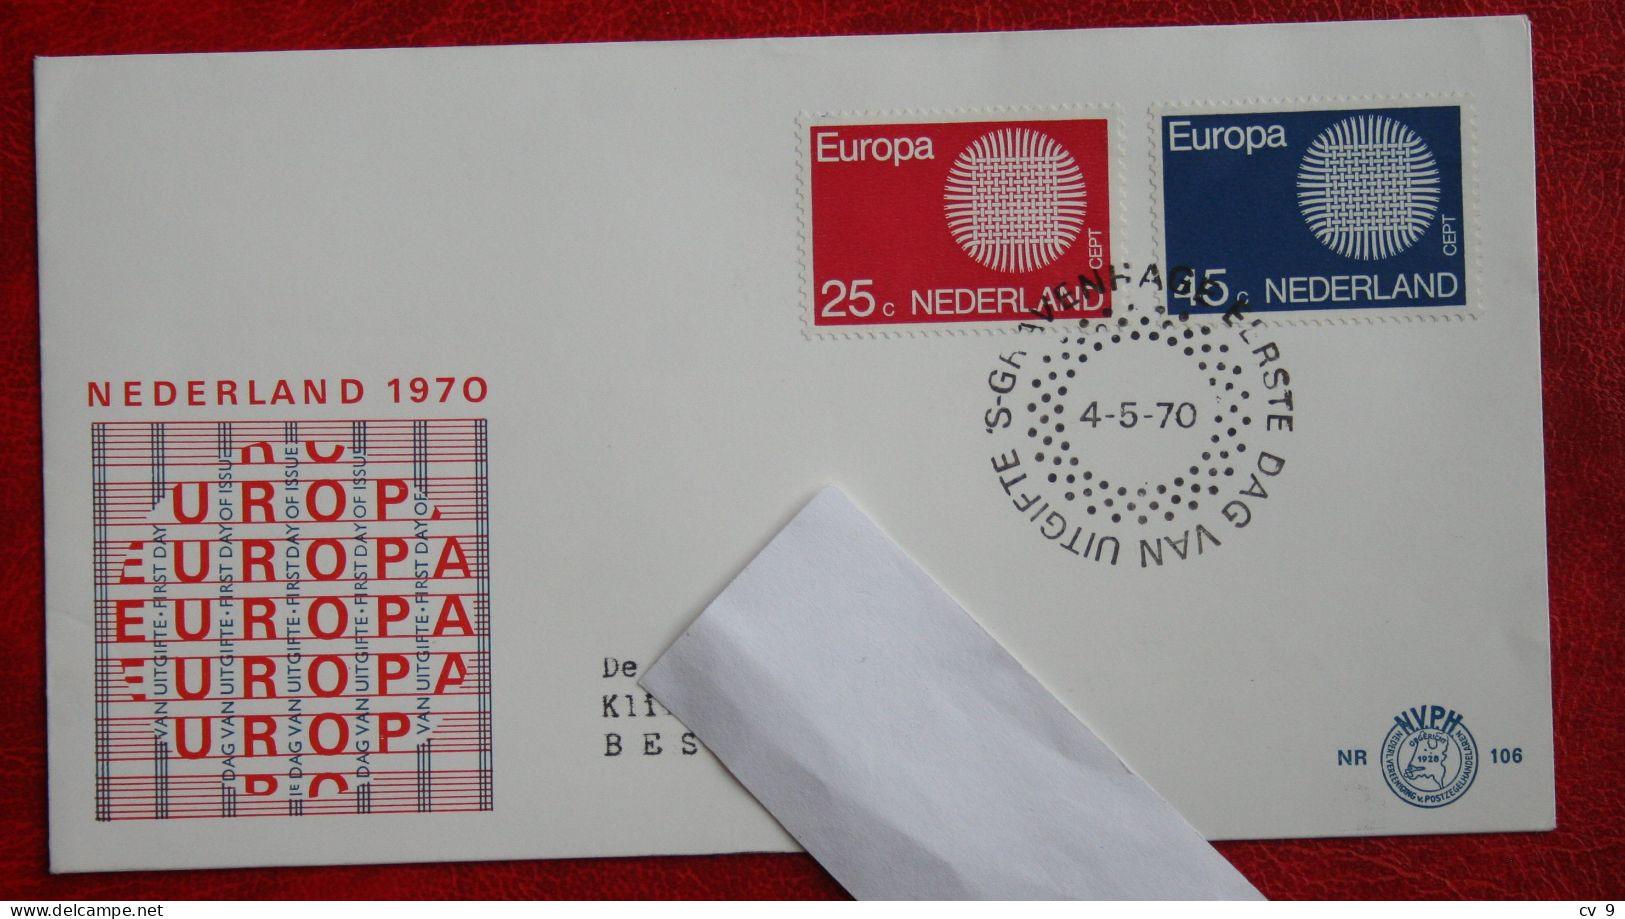 FDC E106 106 EUROPA CEPT NVPH 971-972 1970 With Typed Address NEDERLAND NIEDERLANDE NETHERLANDS - FDC